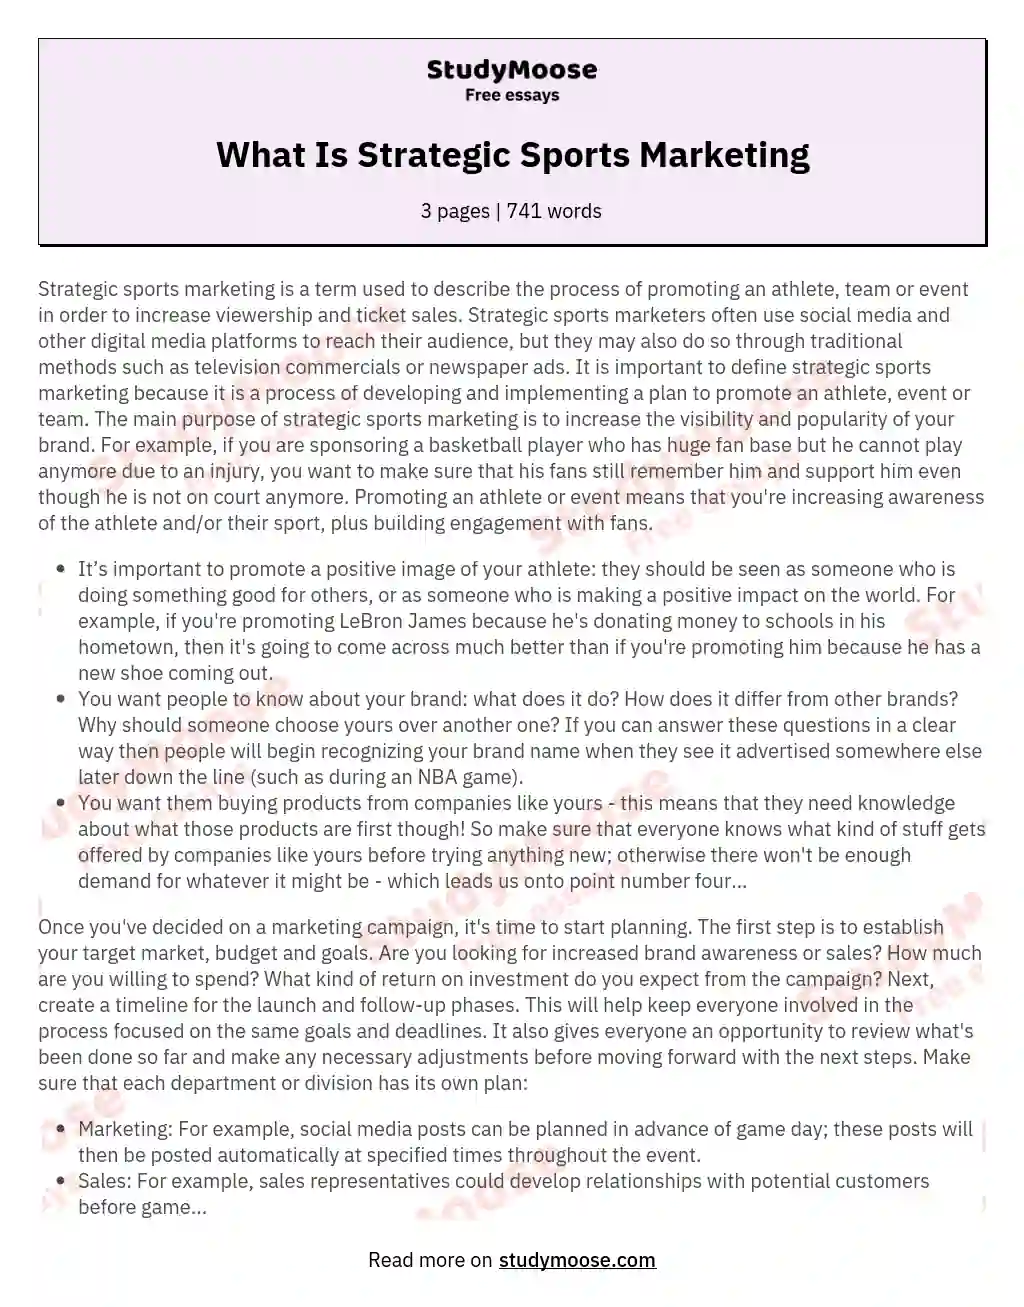 What Is Strategic Sports Marketing essay